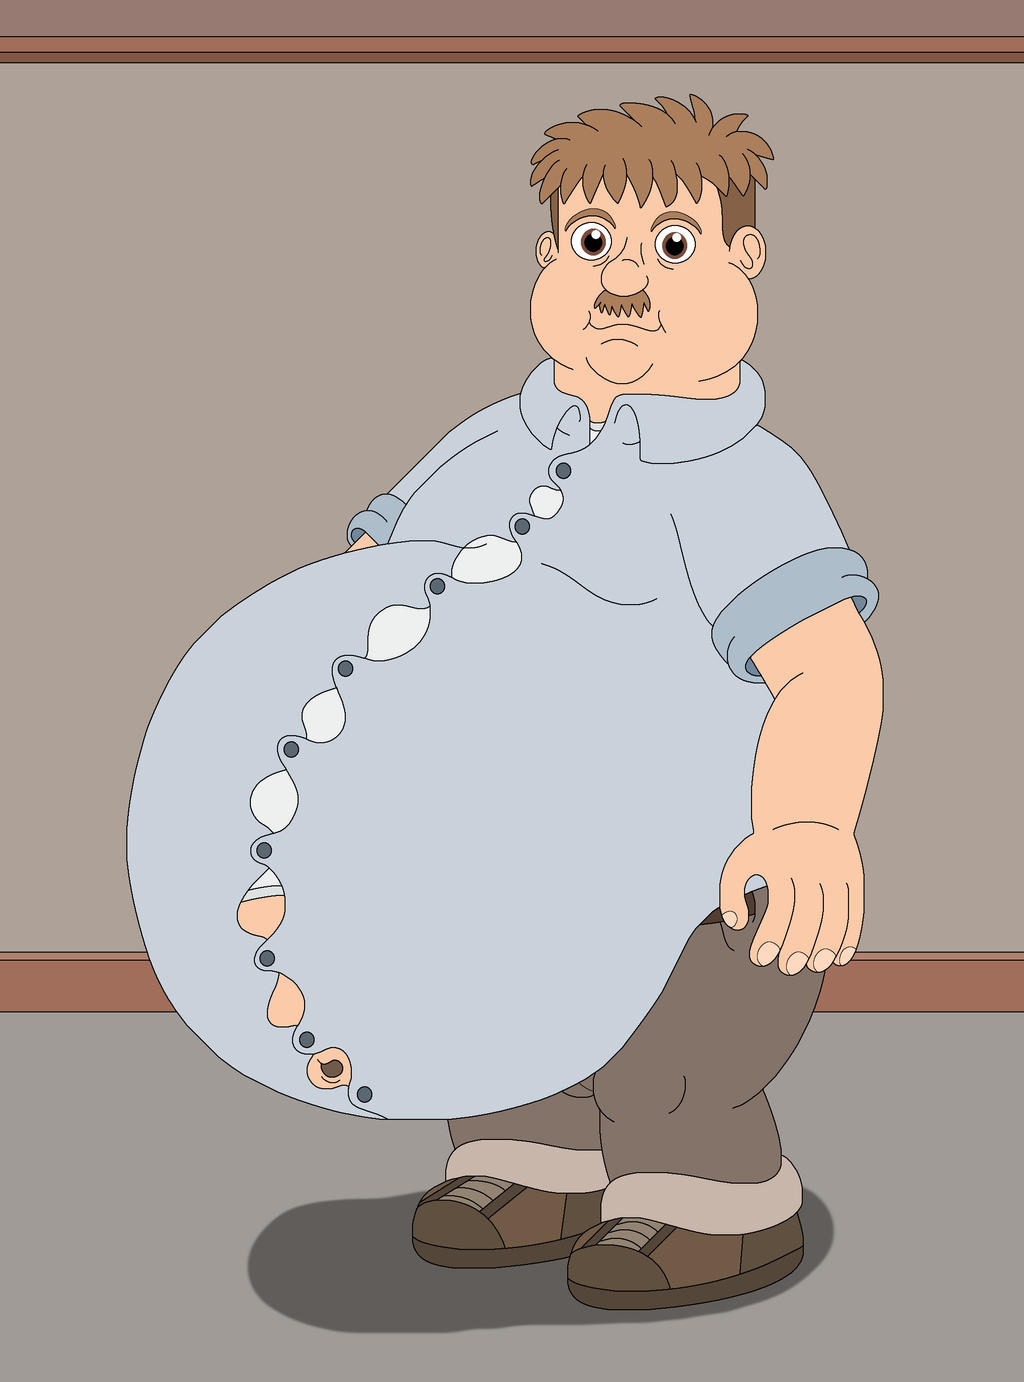 Stanley Bumpo the fat man by MCsaurus on DeviantArt